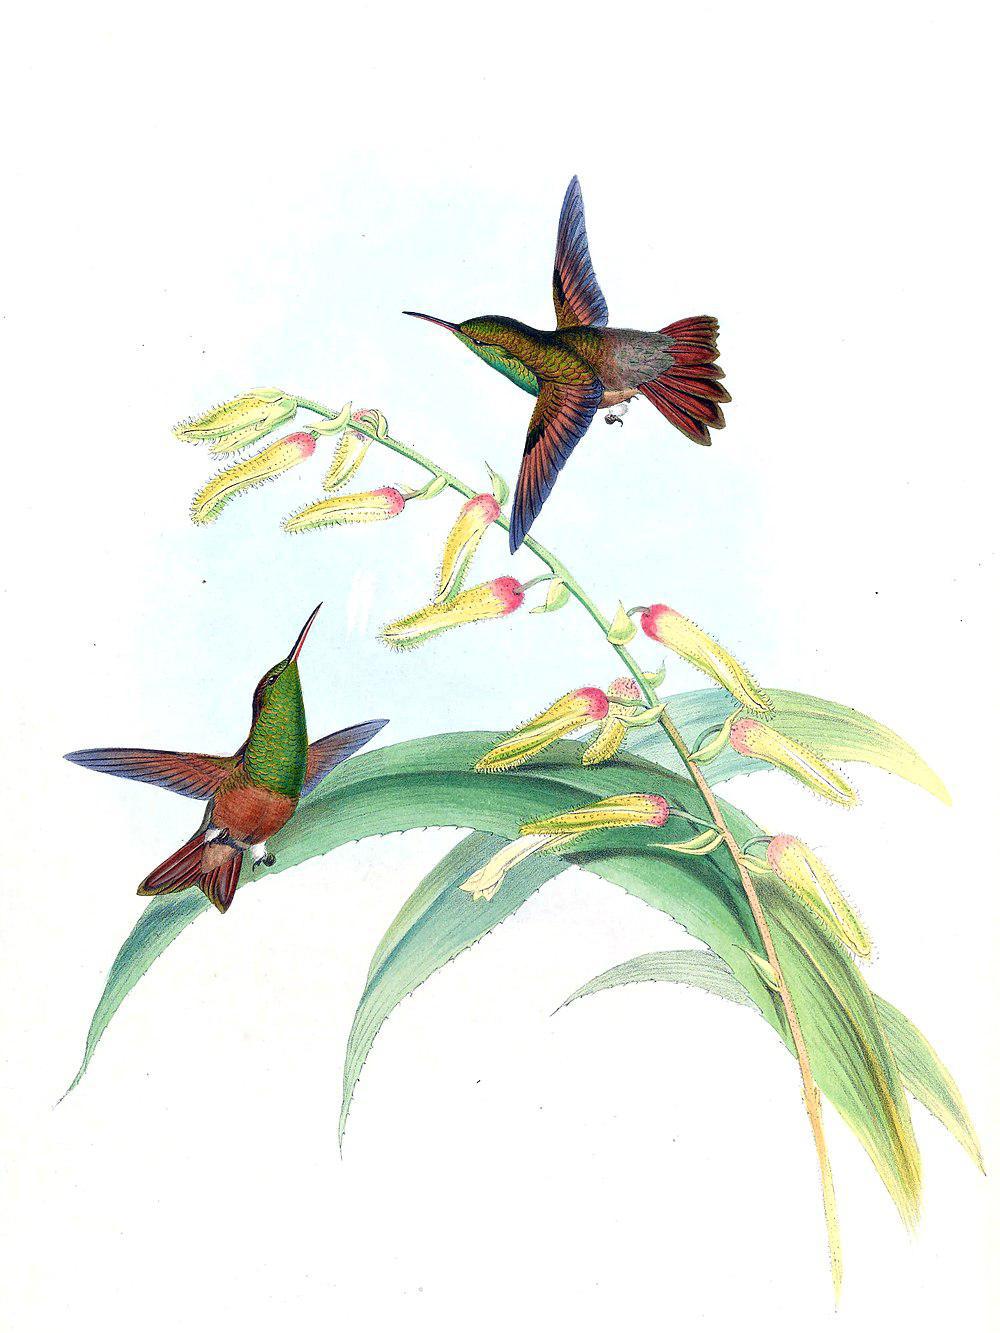 栗腹蜂鸟 / Chestnut-bellied Hummingbird / Saucerottia castaneiventris